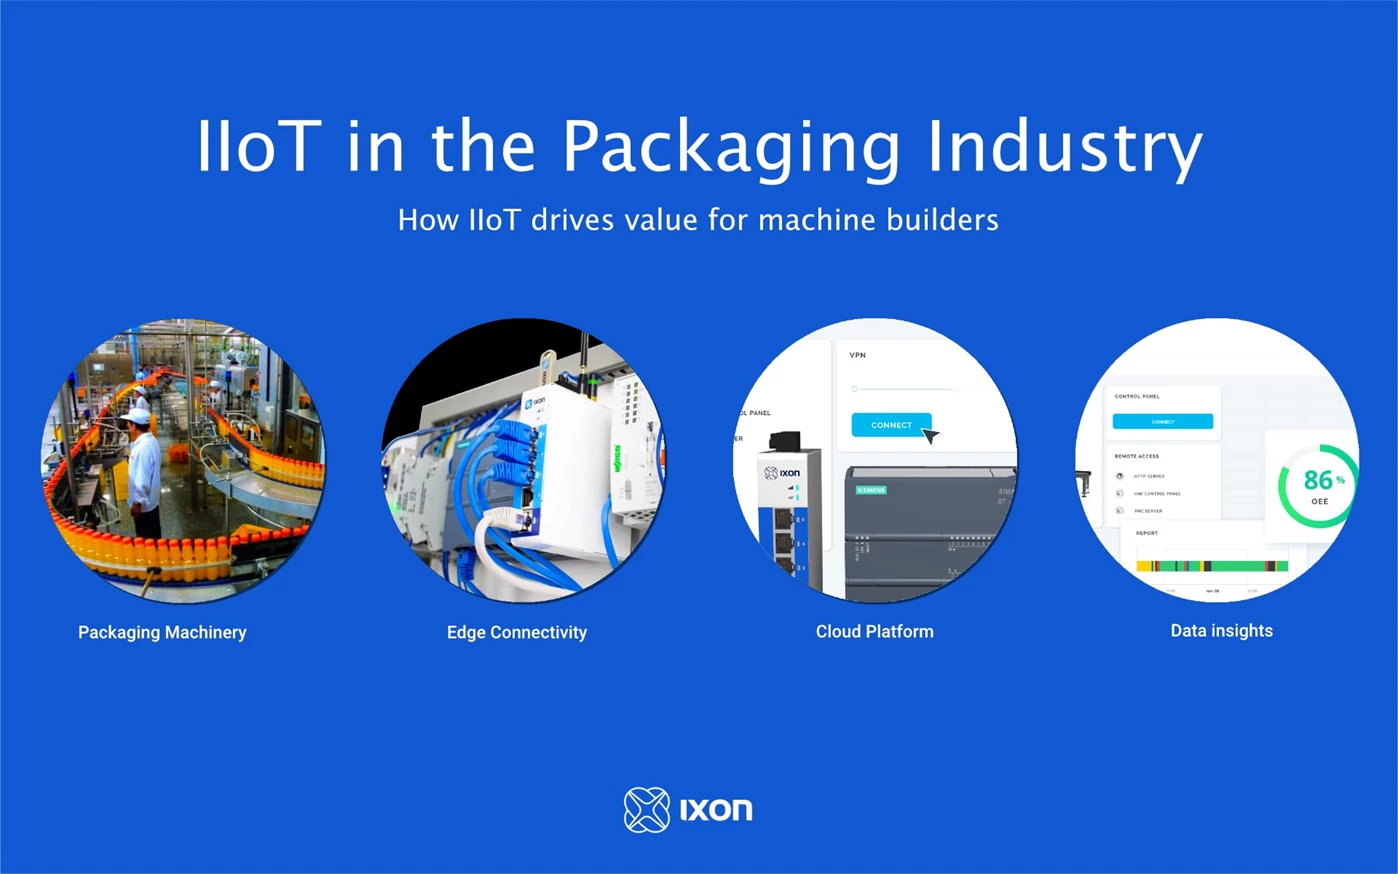 IIoT for machine builders in the packaging industry